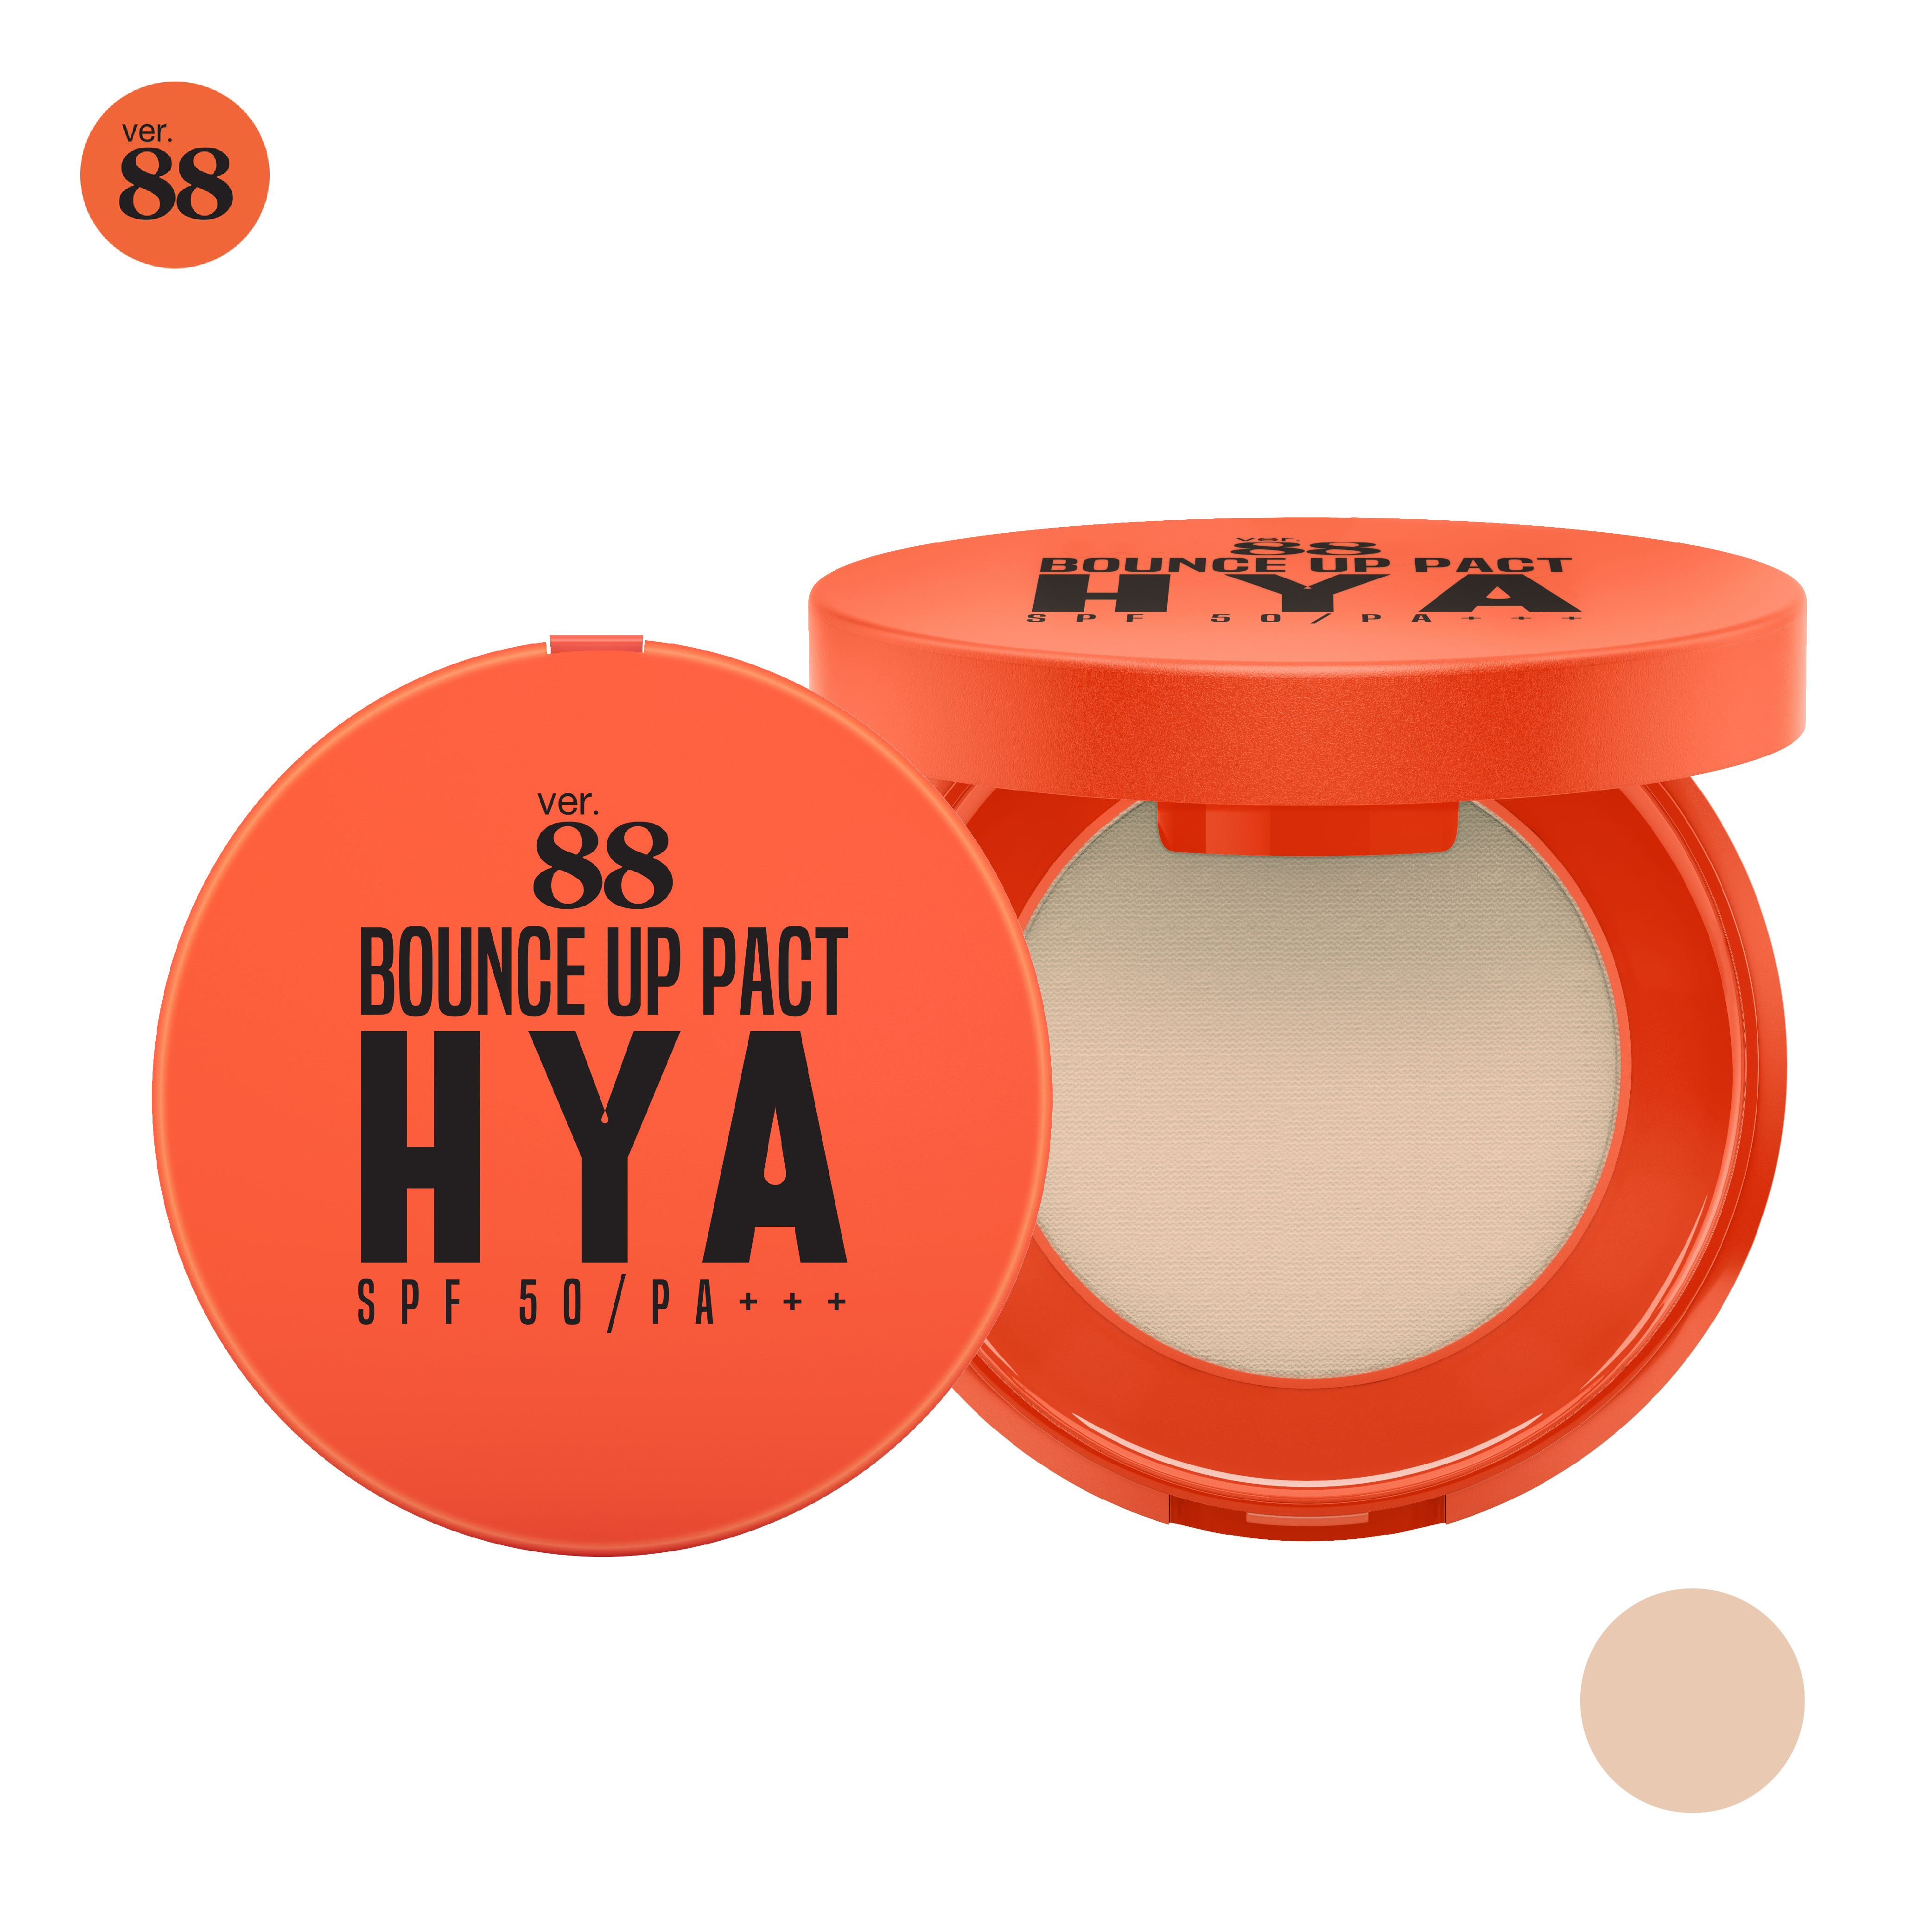 Bounce Up Pact HYA SPF 50/PA +++ แป้งดินน้ำมัน ไฮยา  (5g.)